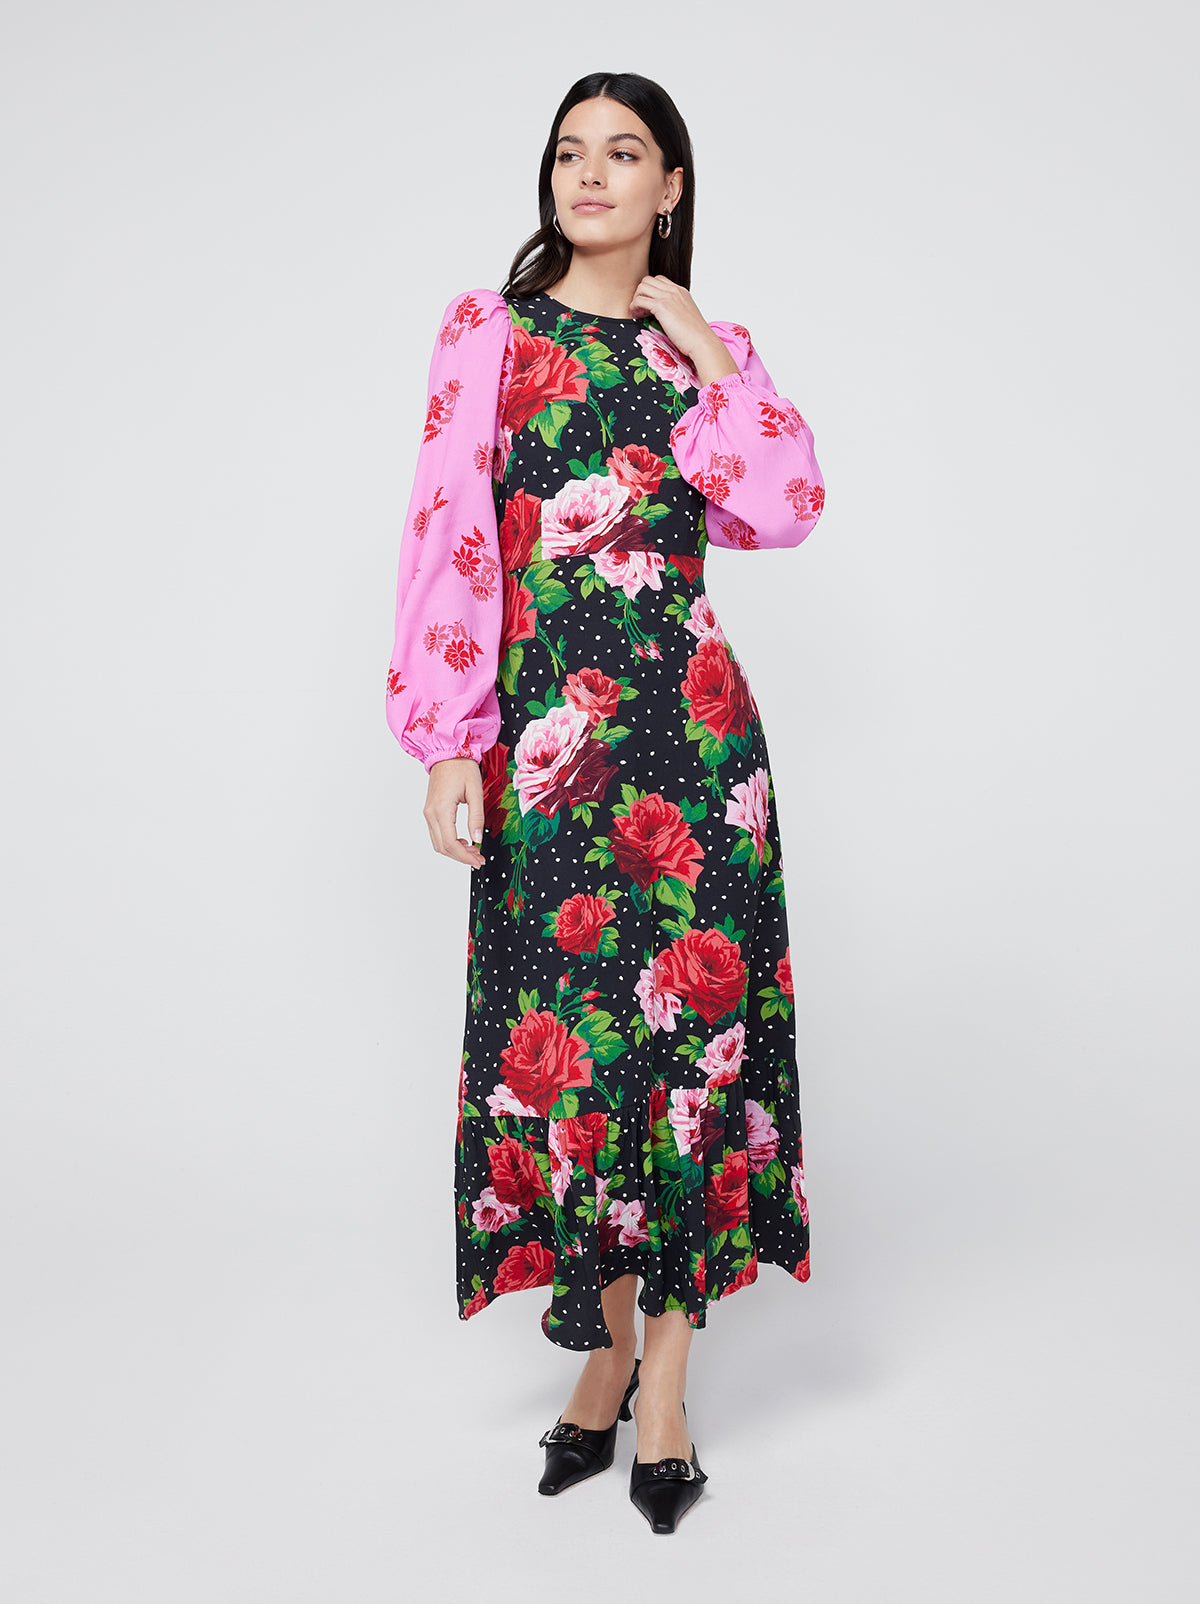 Samara Rose Mixed Print Midi Dress